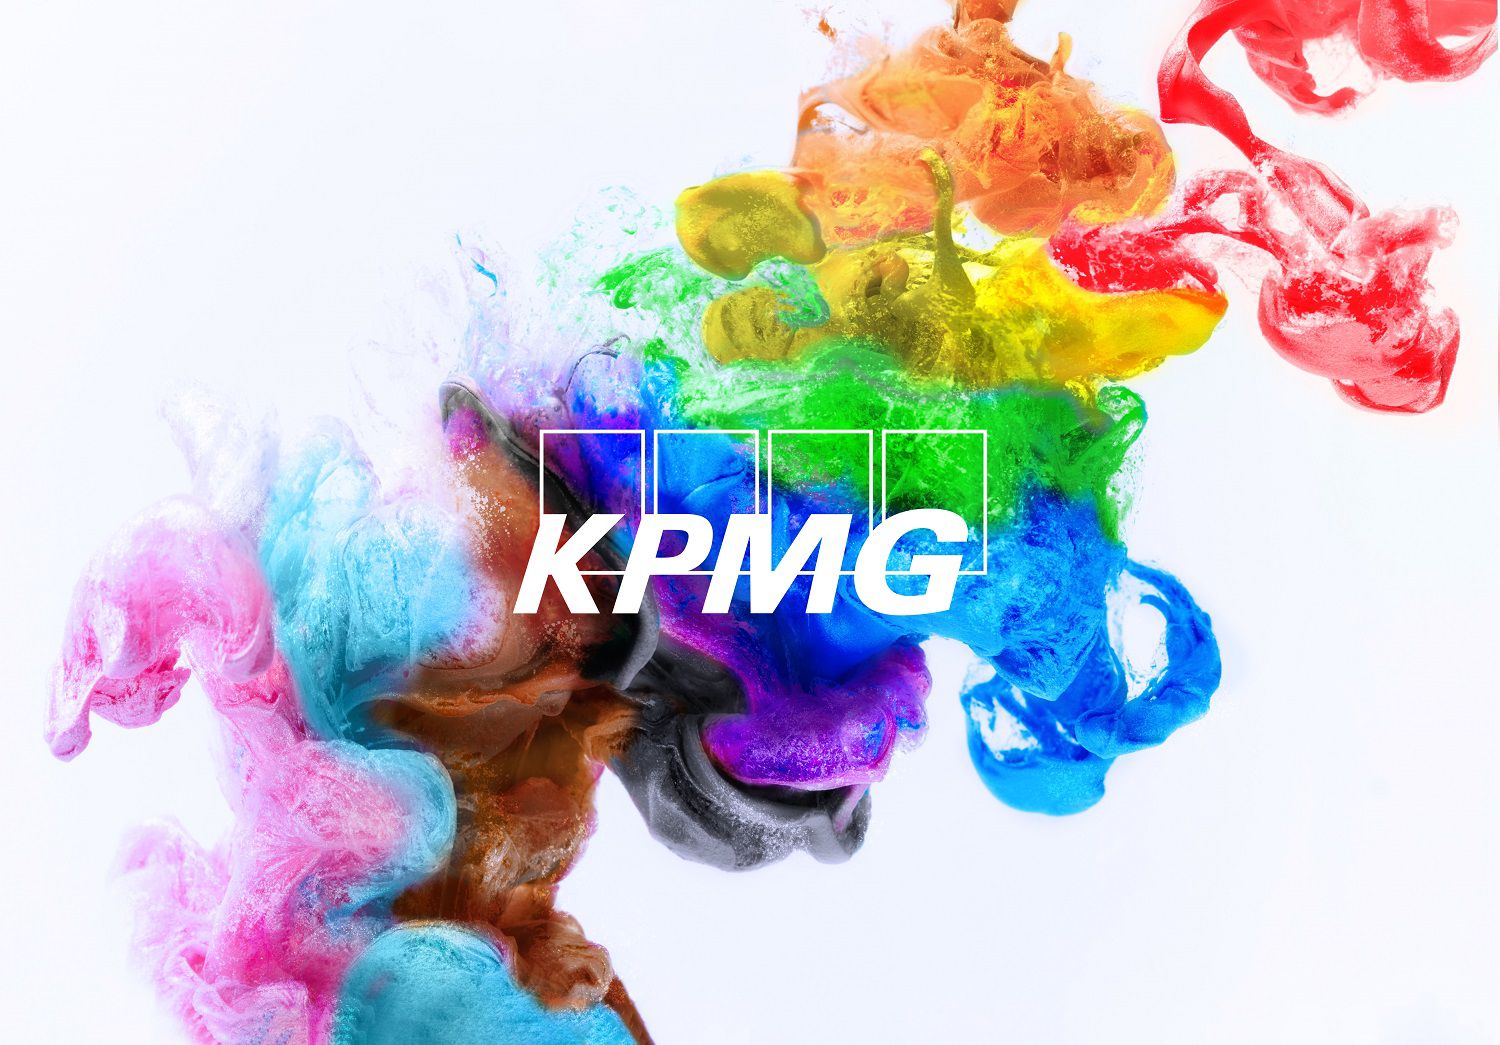 KPMG Inclusion & Diversity